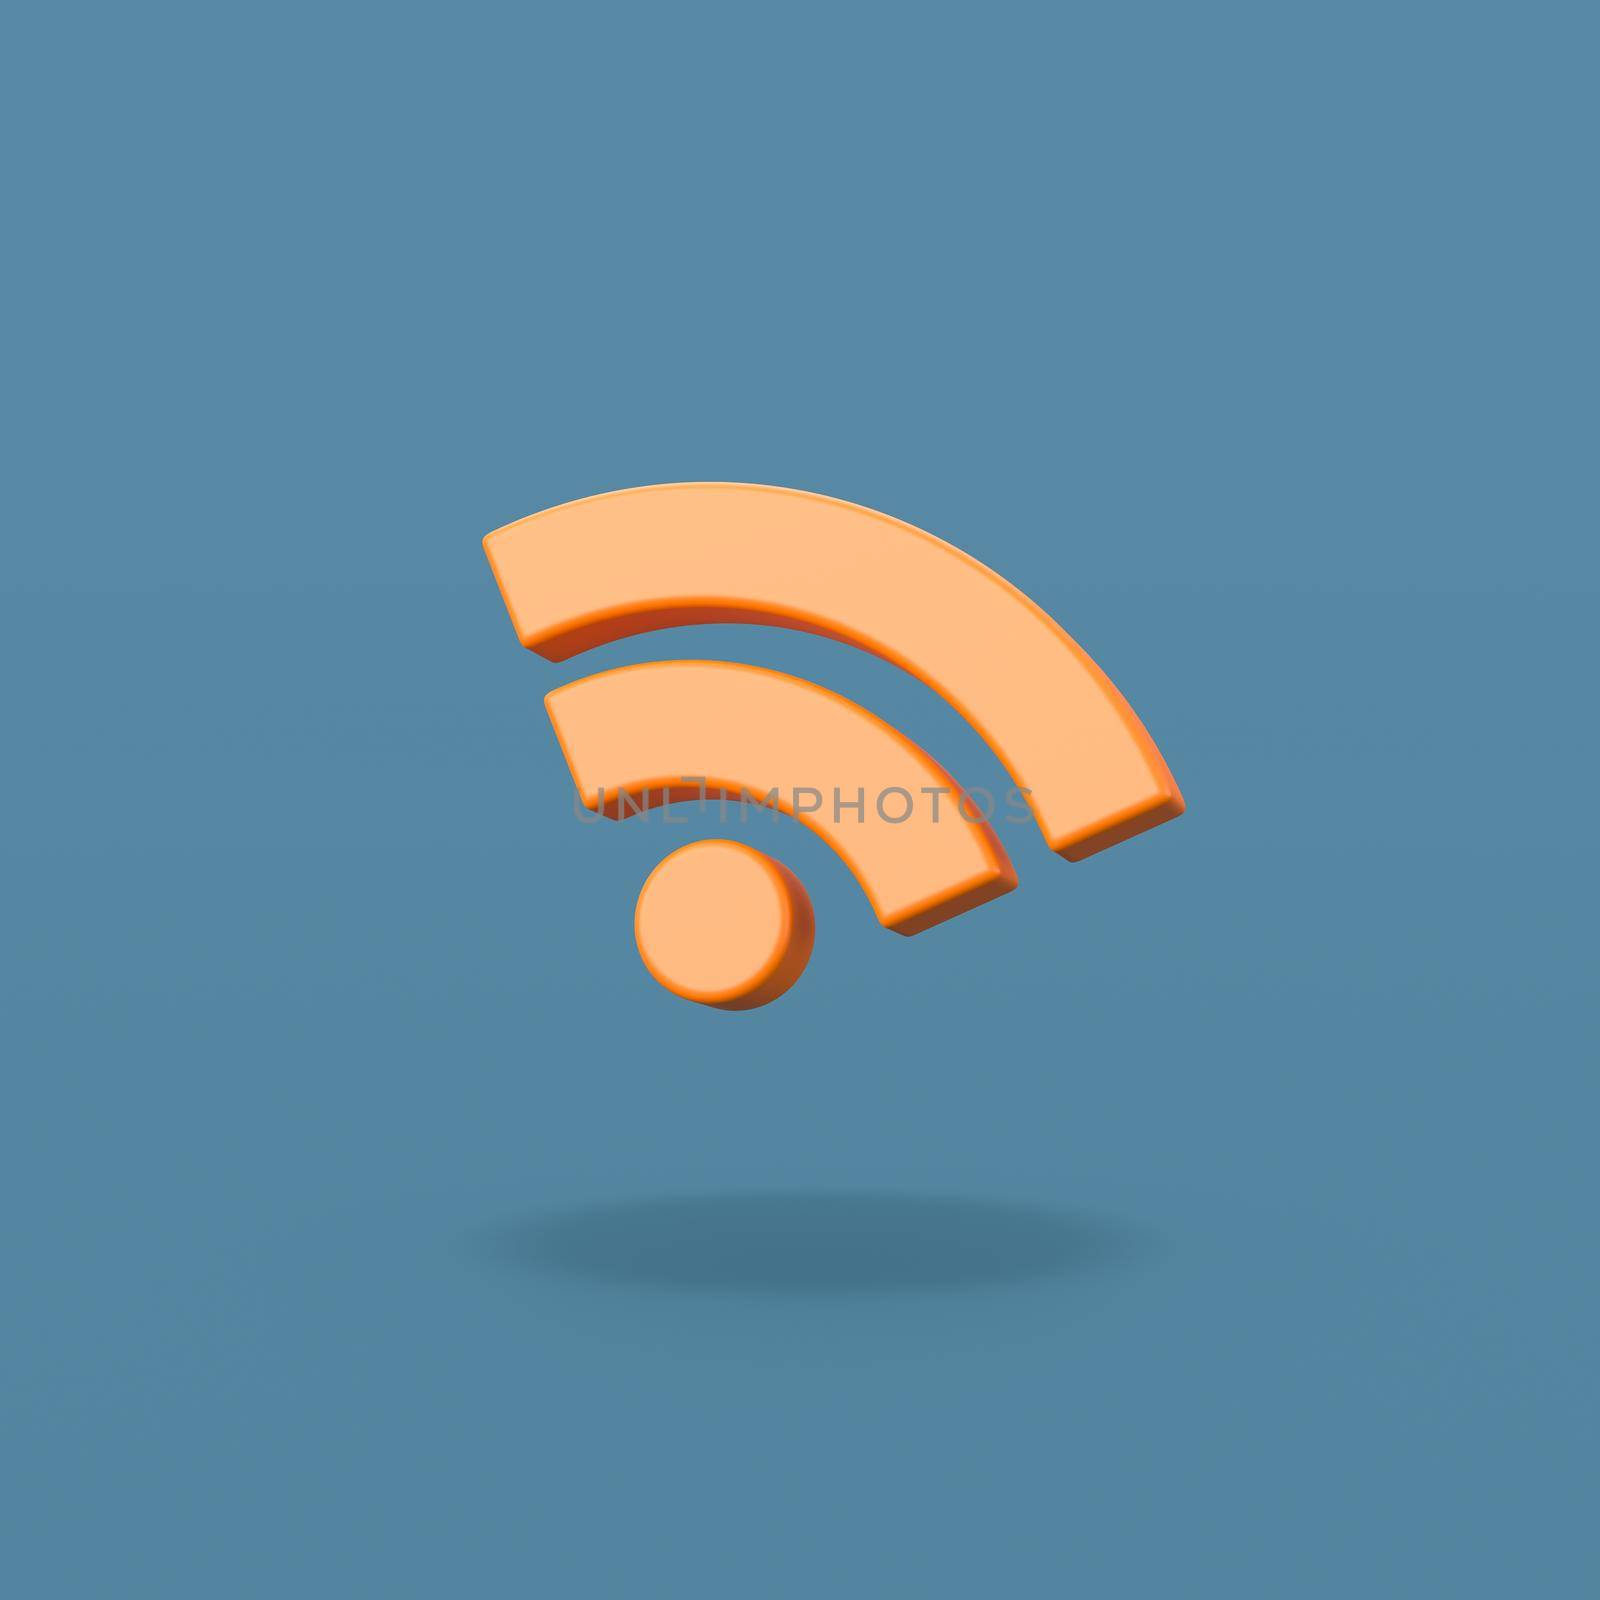 Orange Wifi Symbol Shape on Flat Blue Background with Shadow 3D Illustration